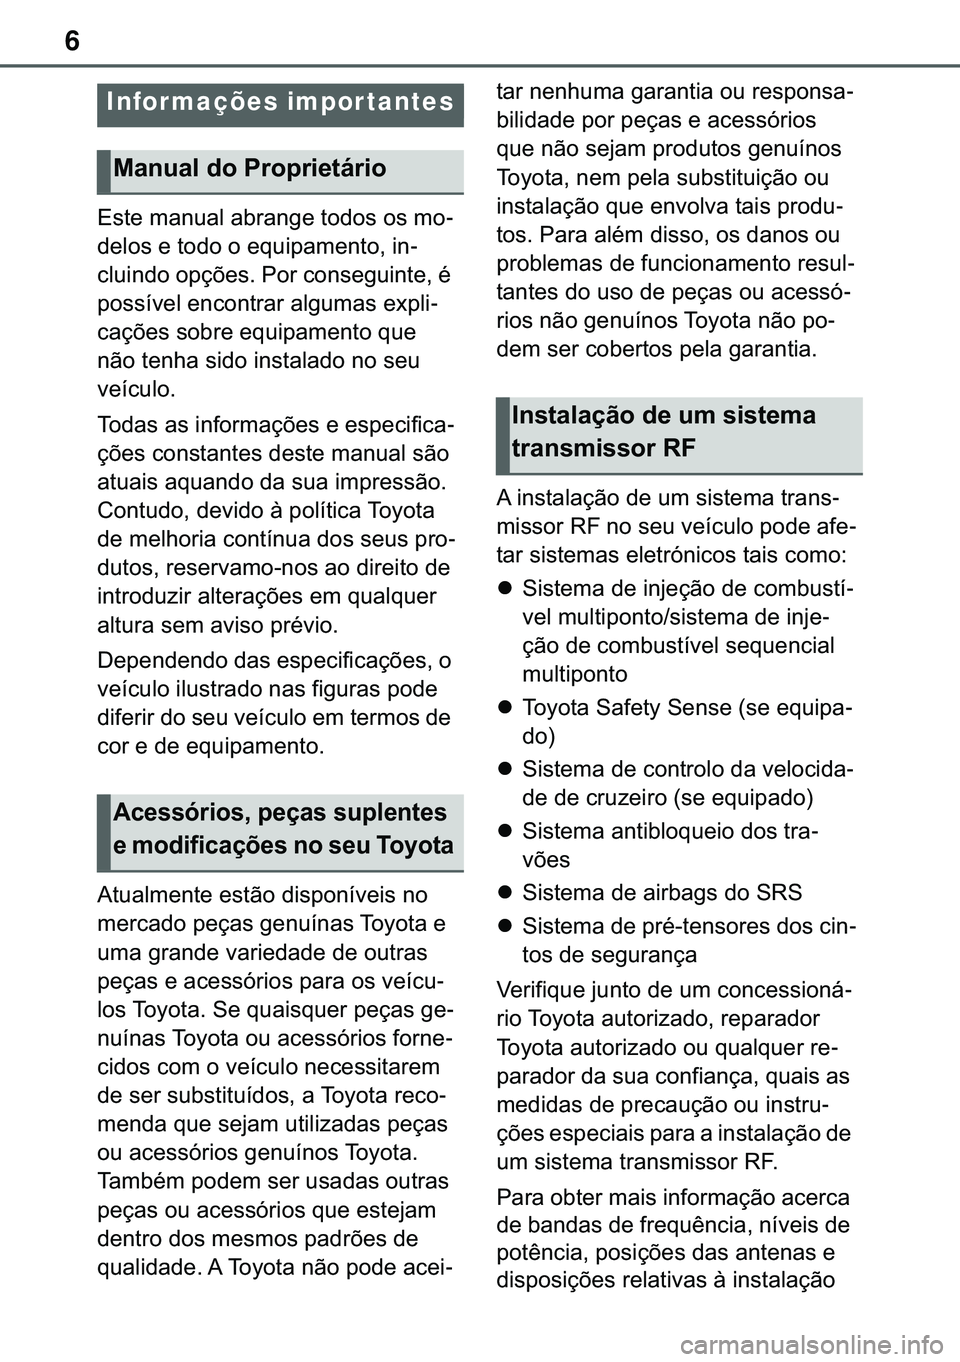 TOYOTA COROLLA 2020  Manual de utilização (in Portuguese) 6
�&�2�5�2�/�/�$ �+�9 �7�0�0�7 �(�(
�(�V�W�H��P�D�Q�X�D�O��D�E�U�D�Q�J�H��W�R�G�R�V��R�V��P�R-
�G�H�O�R�V��H��W�R�G�R��R��H�T�X�L�S�D�P�H�Q�W�R���L�Q-
�F�O�X�L�Q�G�R��R�S�o�}�H�V���3�R�U